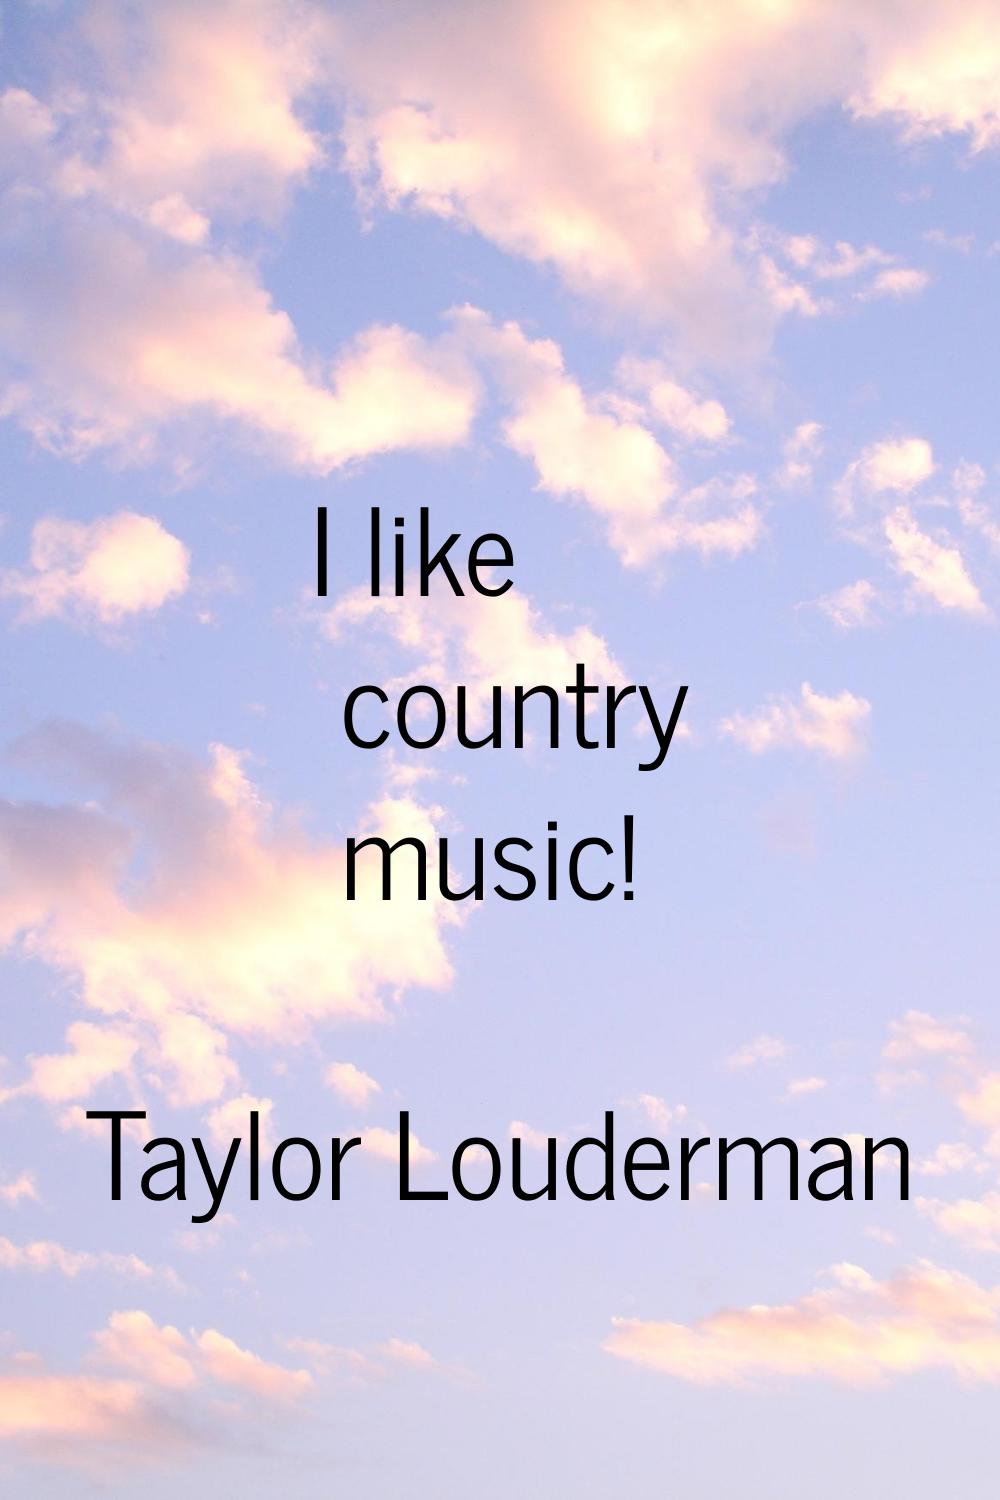 I like country music!